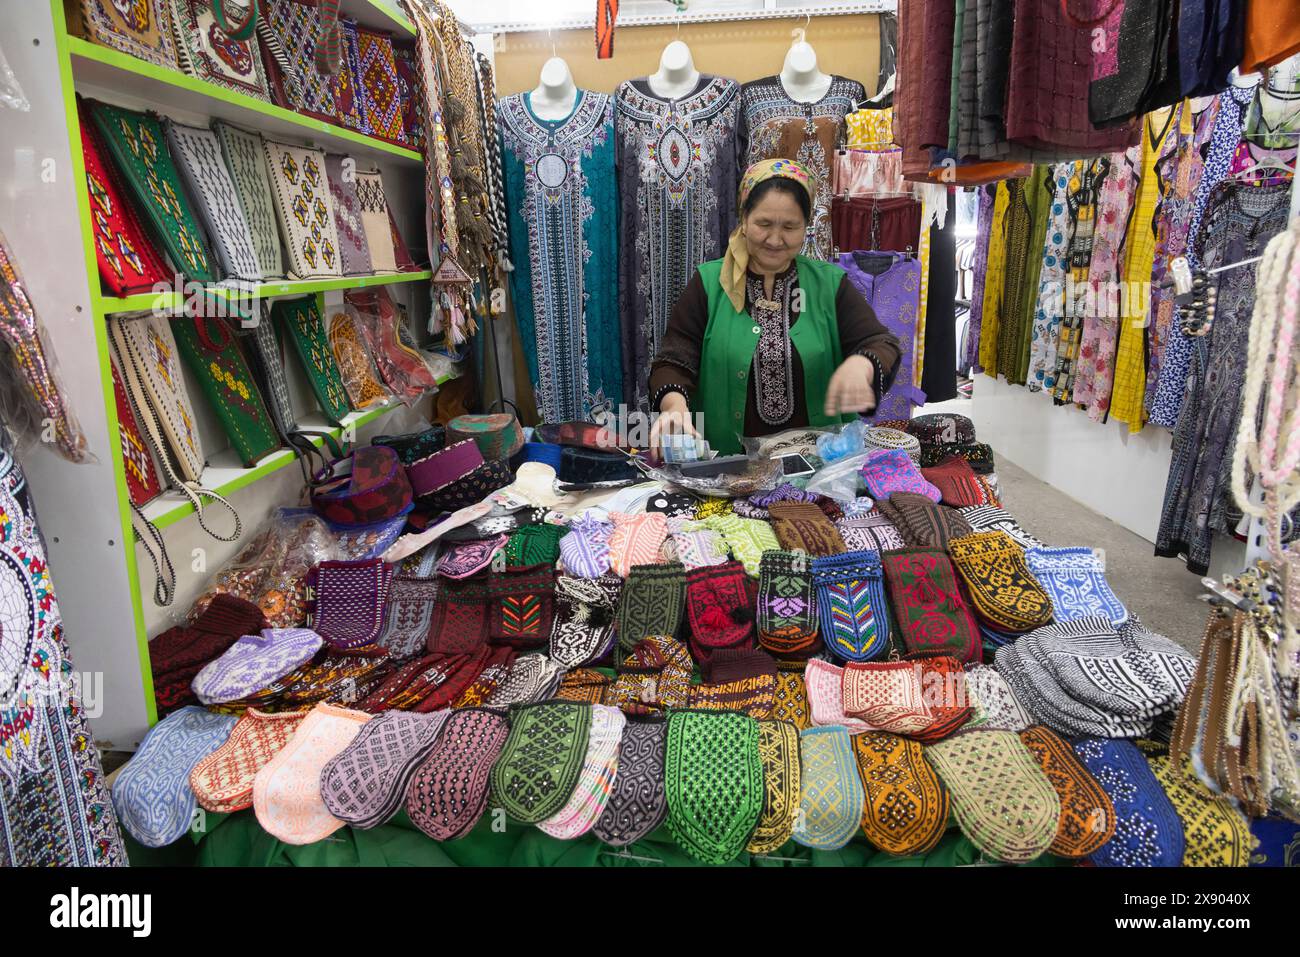 stall selling socks, bags, and clothing, Bazaar, Ashgabat, Turkmenistan Stock Photo